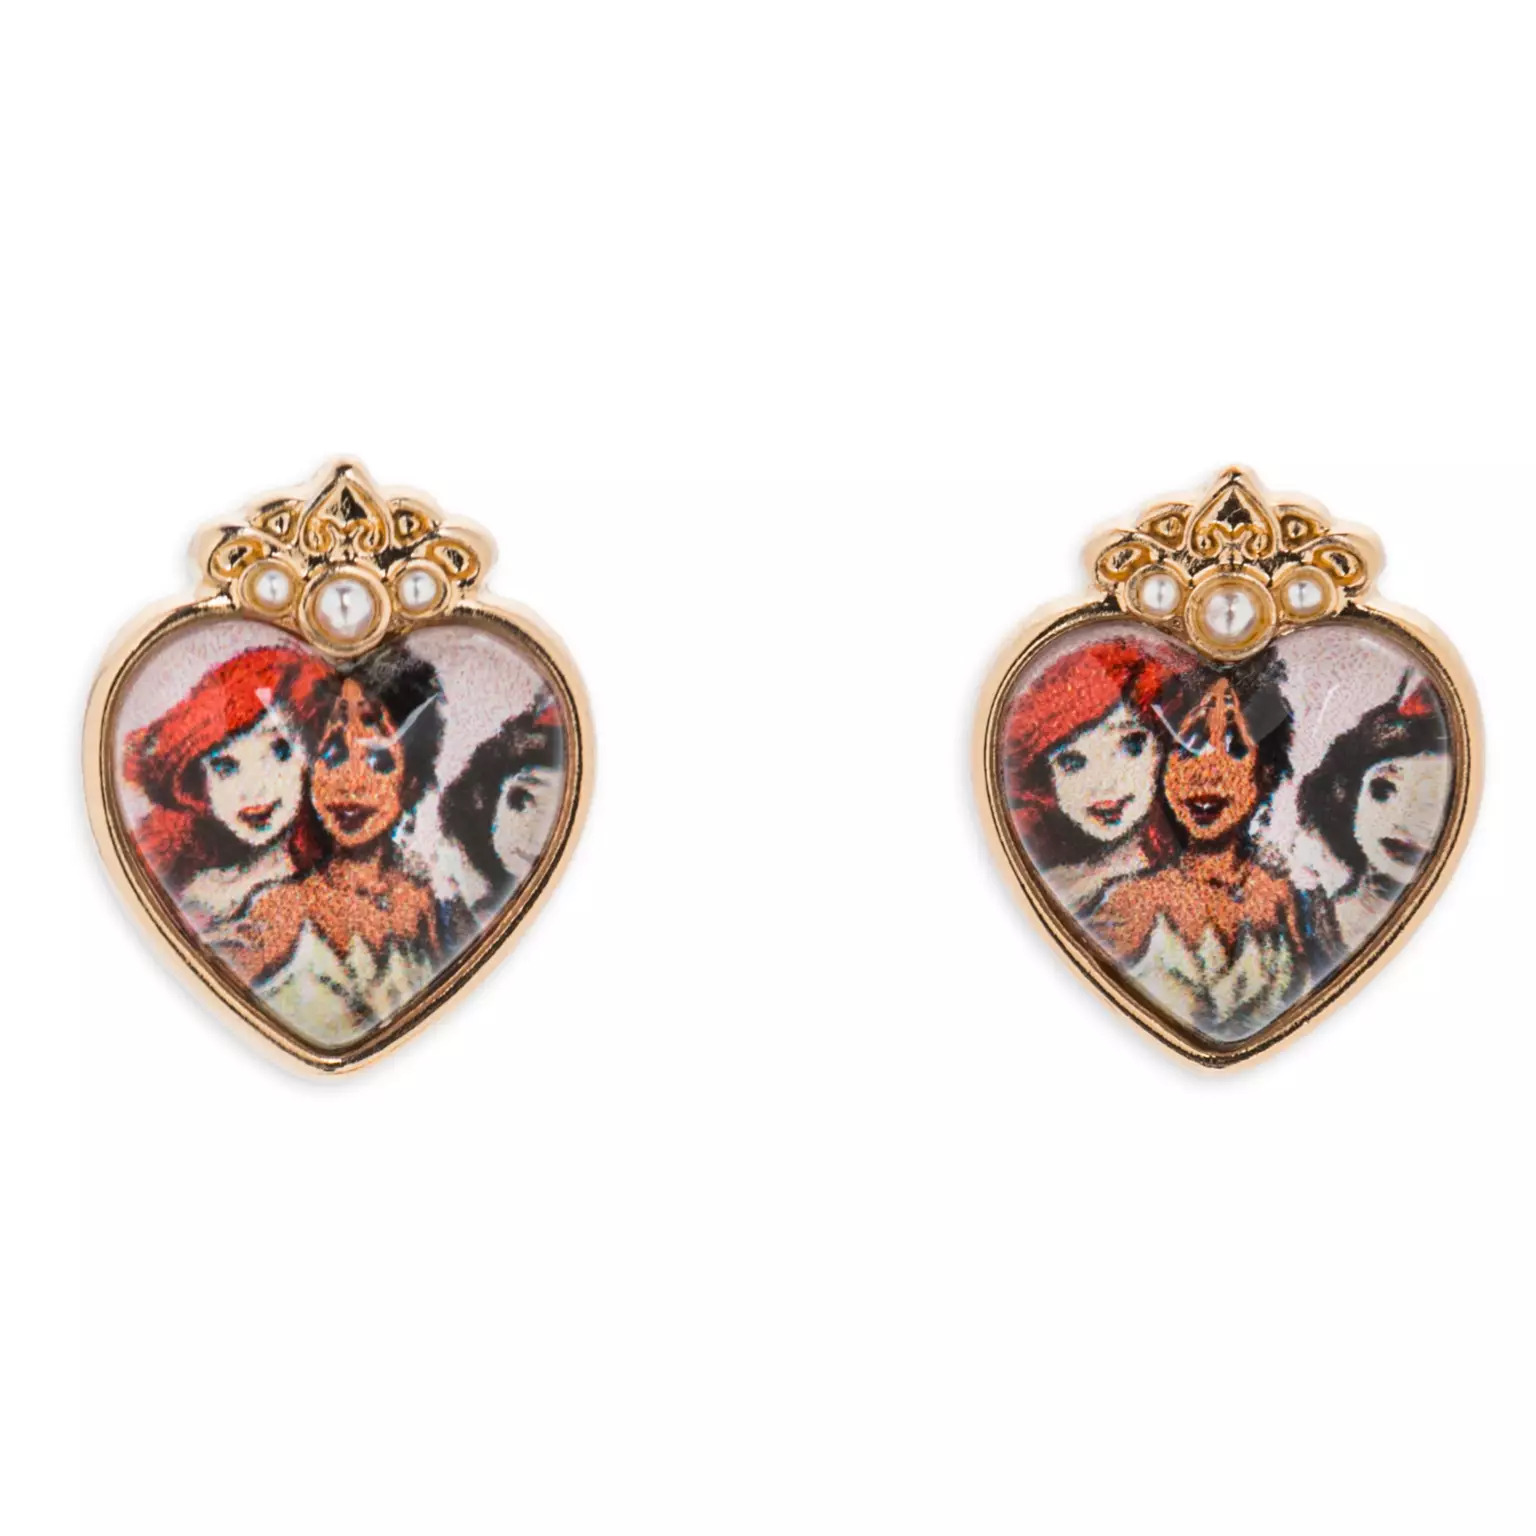 Disney Princess Pierced Earrings for Kids - Snow White, Ariel and Tiana - New